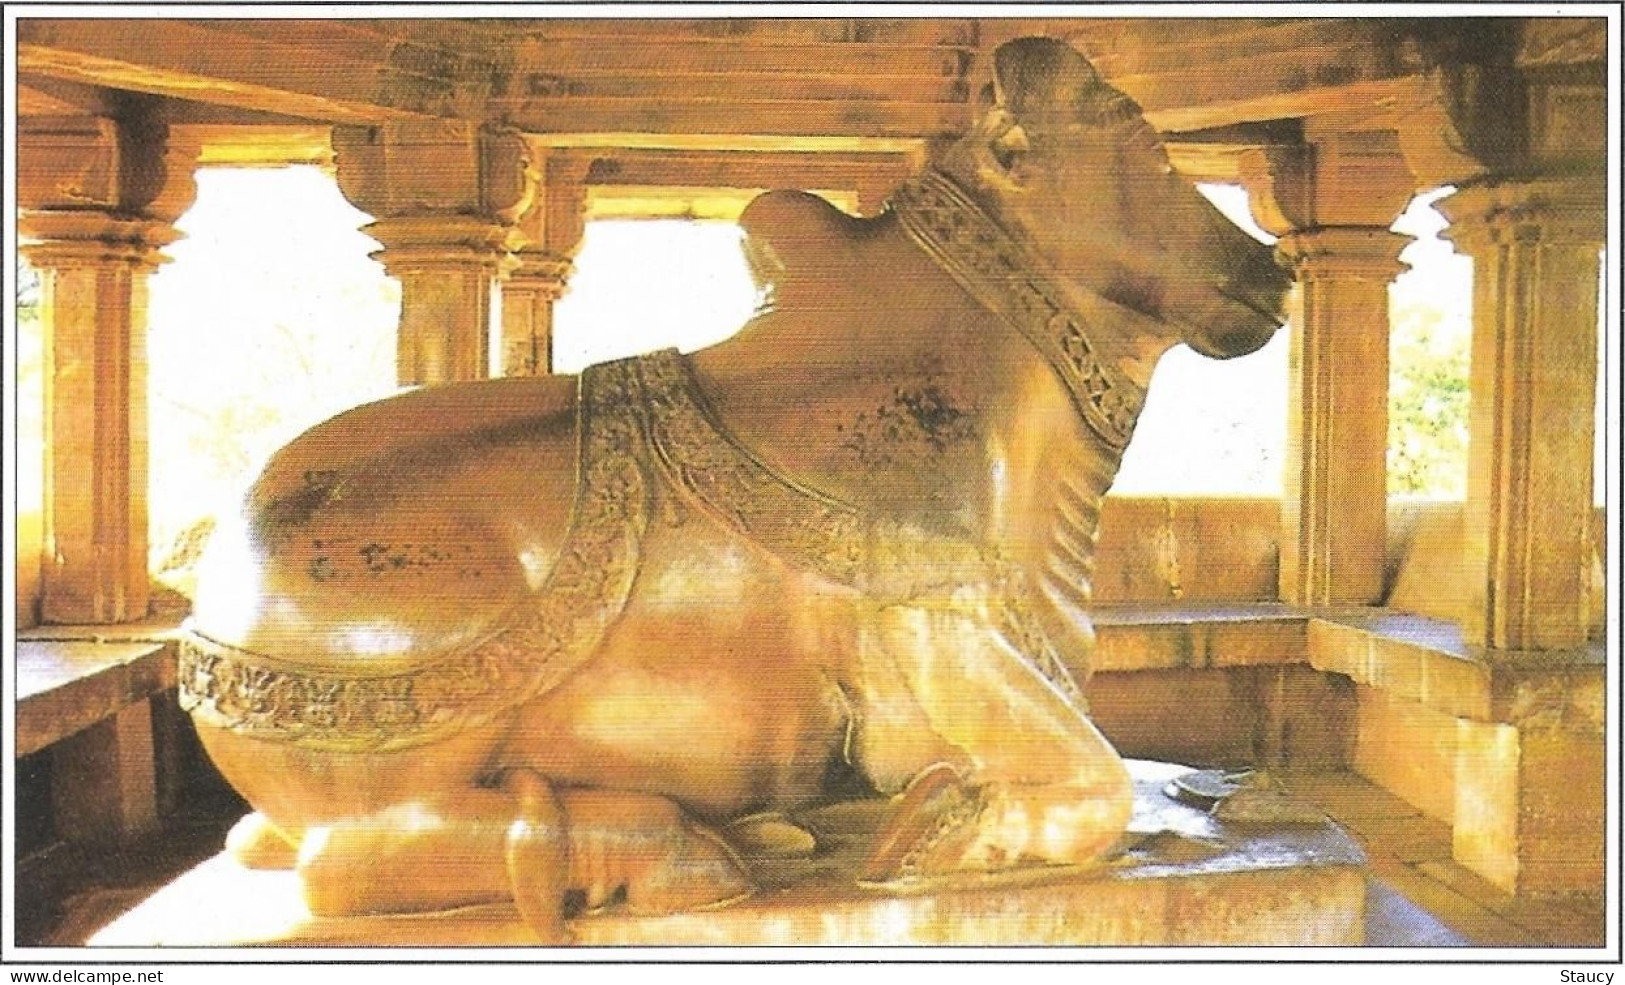 India Khajuraho Temples MONUMENTS - NANDI VISHVANATH Temple Picture Post CARD New As Per Scan - Völker & Typen